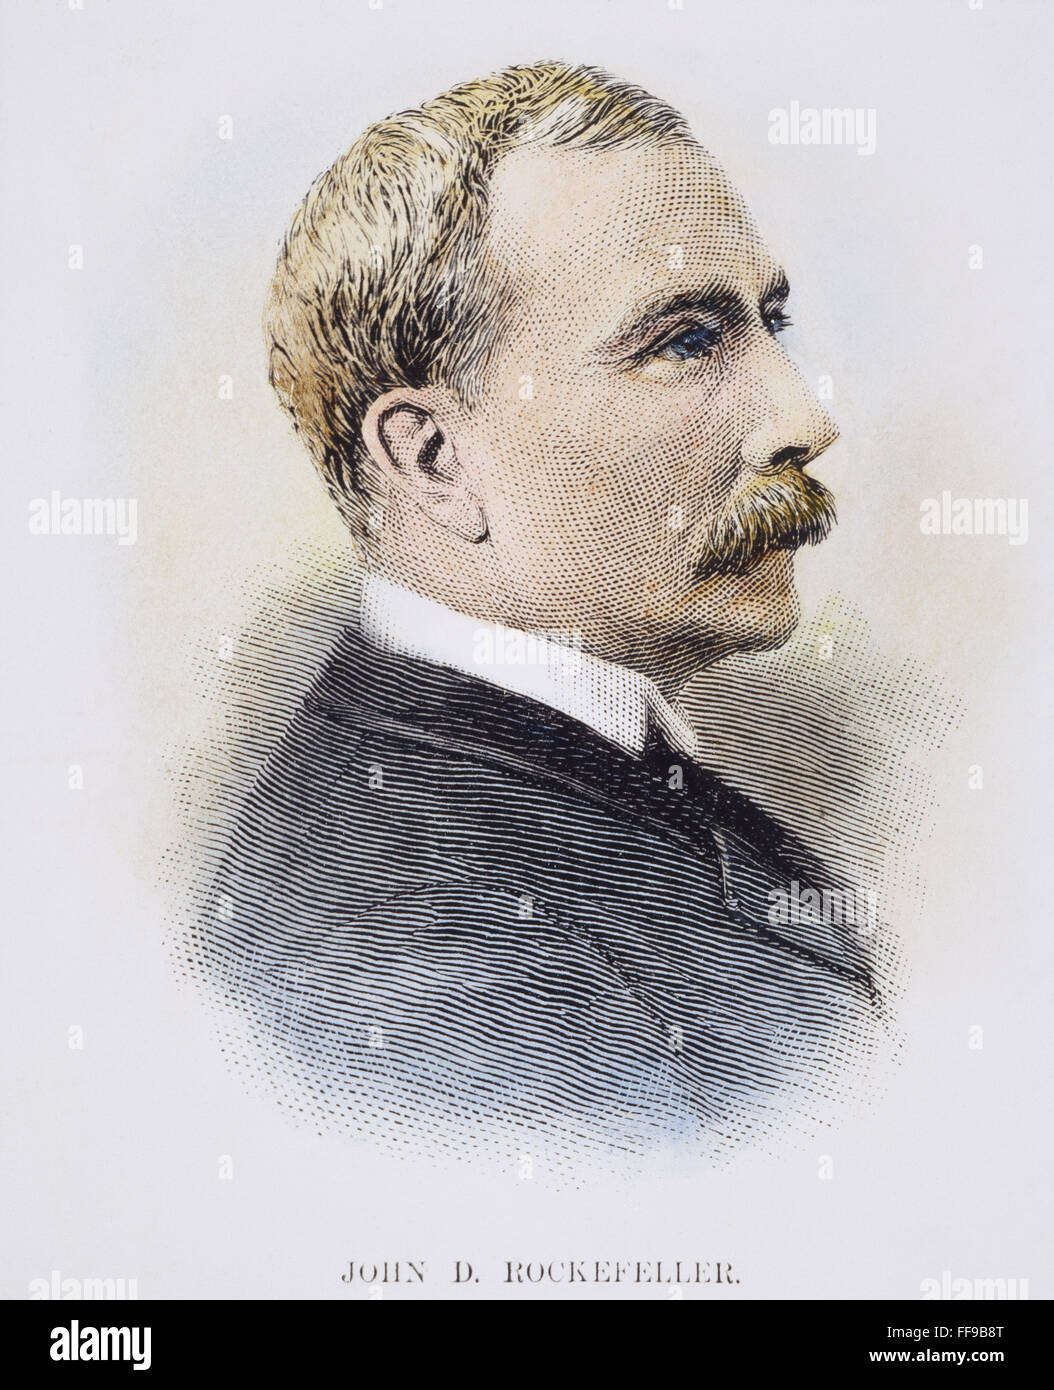 JOHN D. ROCKEFELLER /n(1839-1937). American oil magnate. Wood engraving, American, 1889. Stock Photo